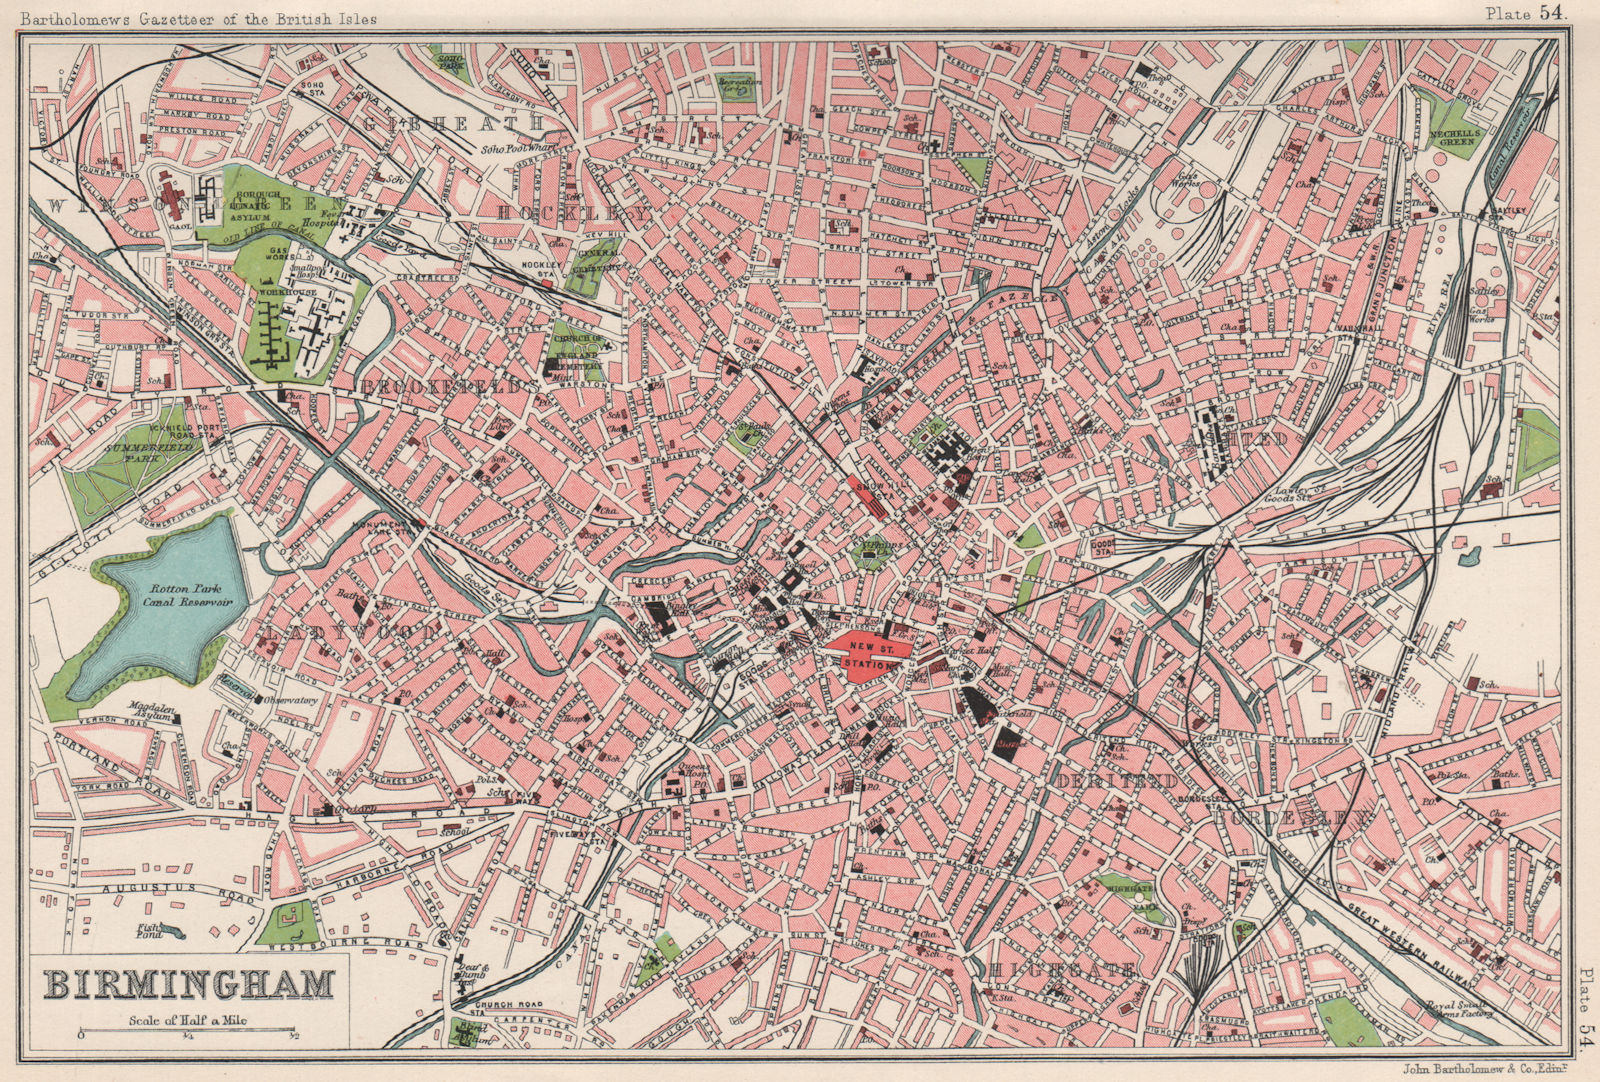 Associate Product BIRMINGHAM antique town/city plan. BARTHOLOMEW 1904 old map chart